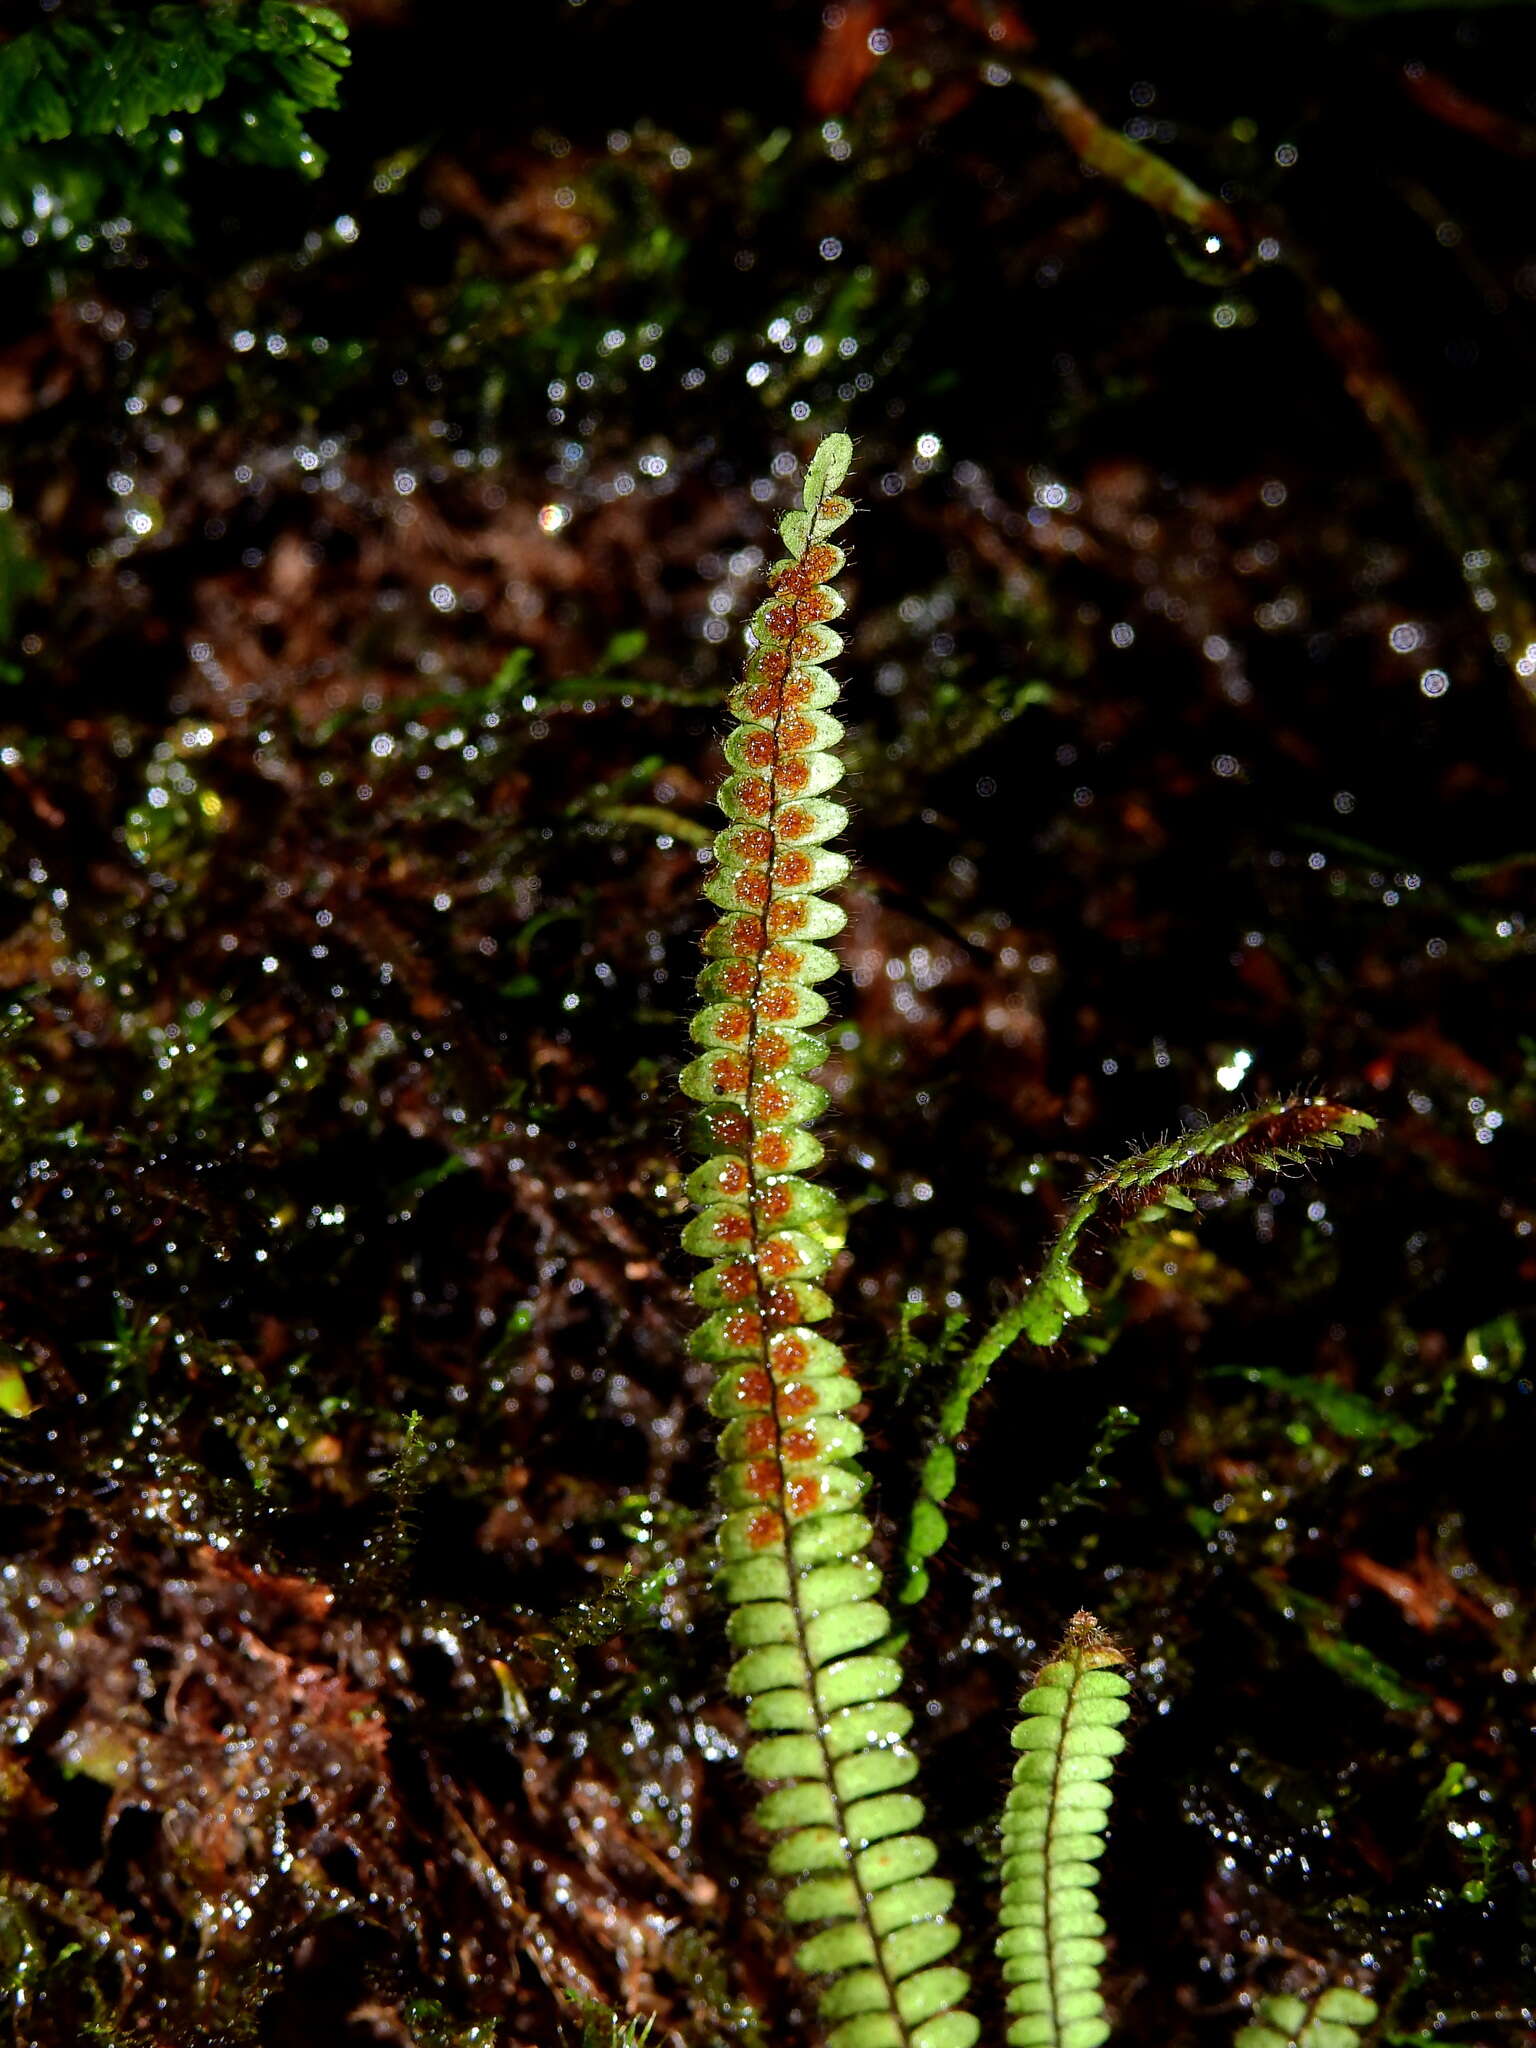 Image of Moranopteris taenifolia (Jenm.) R. Y. Hirai & J. Prado